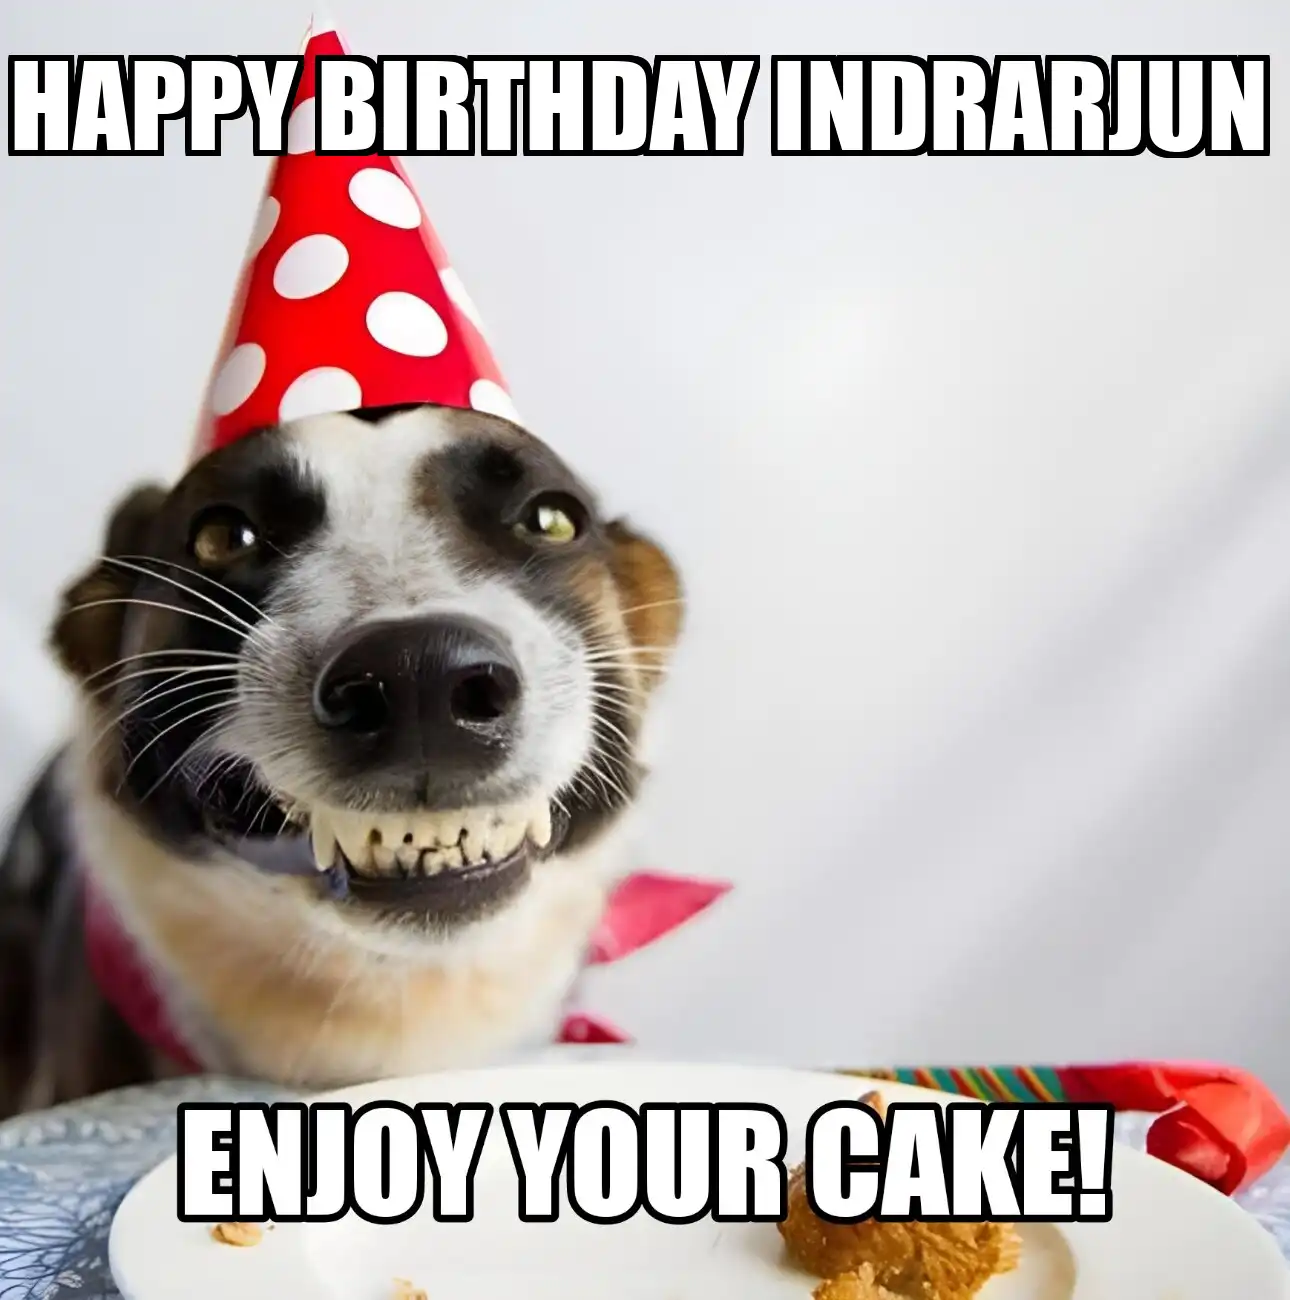 Happy Birthday Indrarjun Enjoy Your Cake Dog Meme